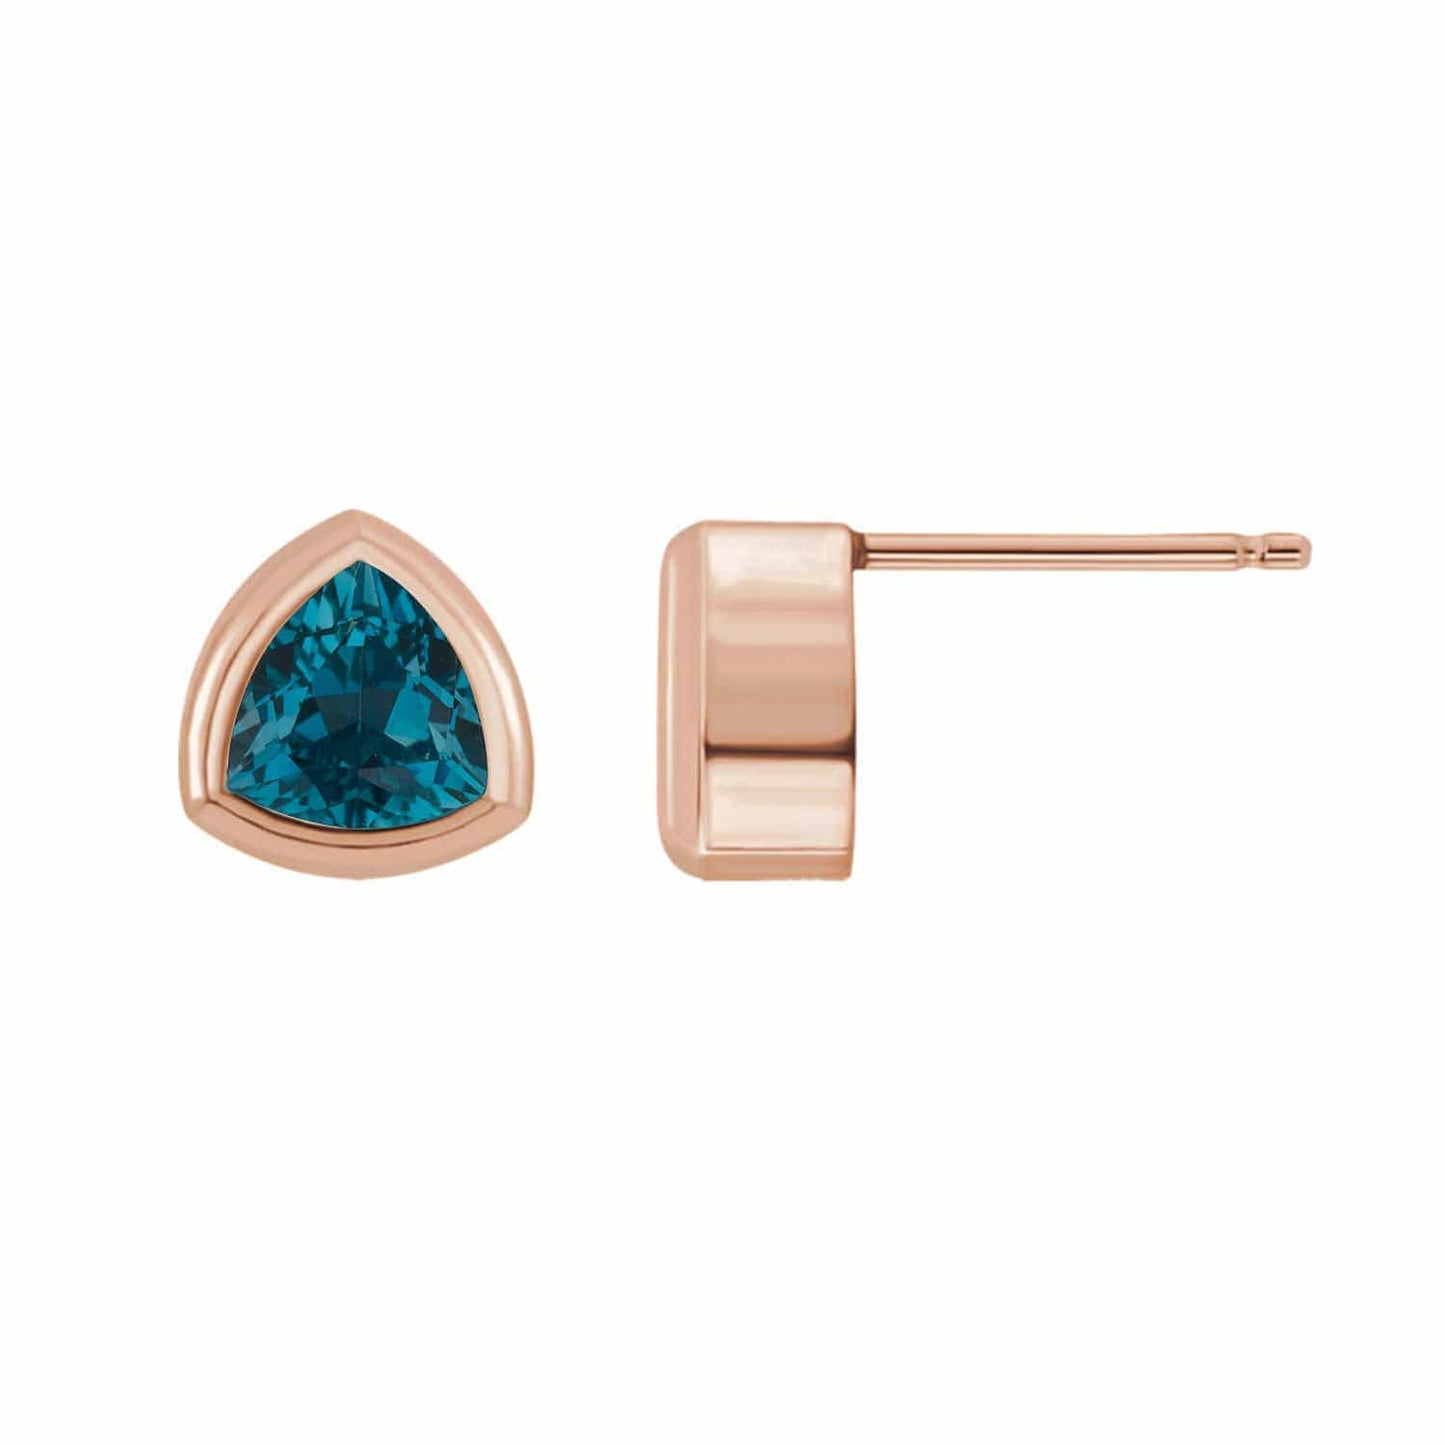 Trillion London Blue Topaz Bezel Set Stud Earrings 14k Rose Gold / 6mm Trillion Topaz Earrings by Nodeform